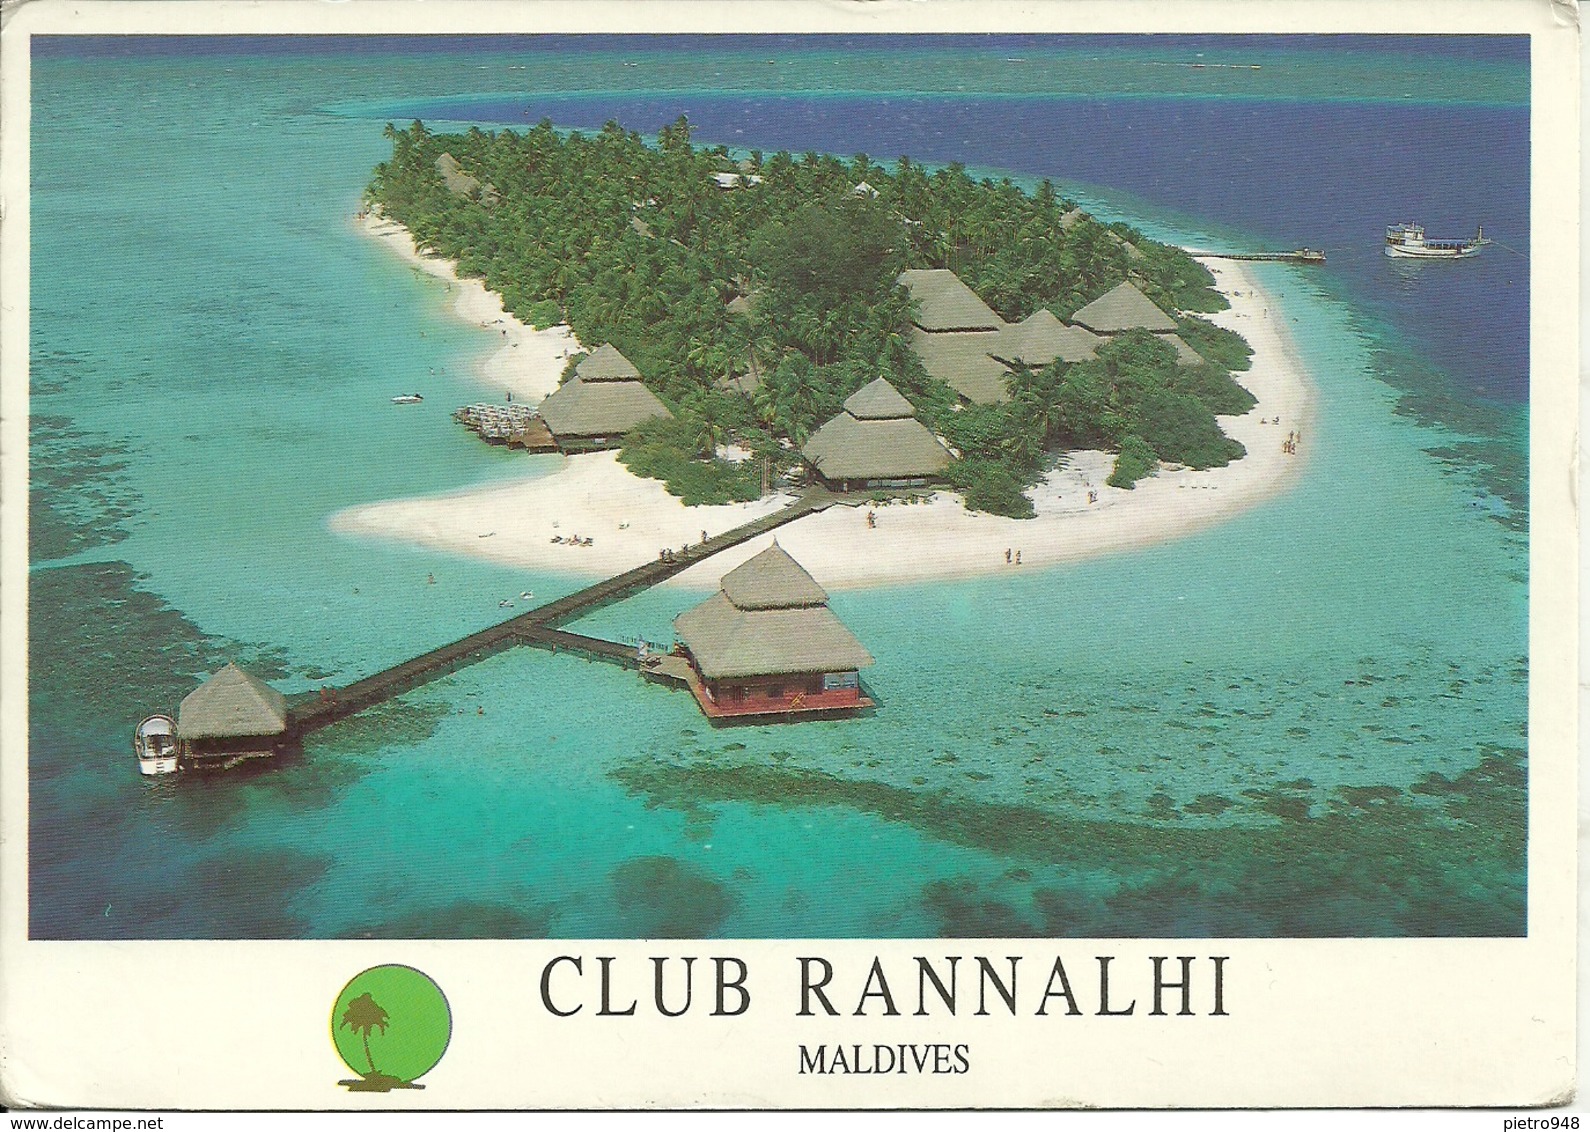 Maldives, Club Rannalhi, An Aitken Spence Hotel, Aerial View, Thematic Stamp "Basket Barcelona '92", - Maldives